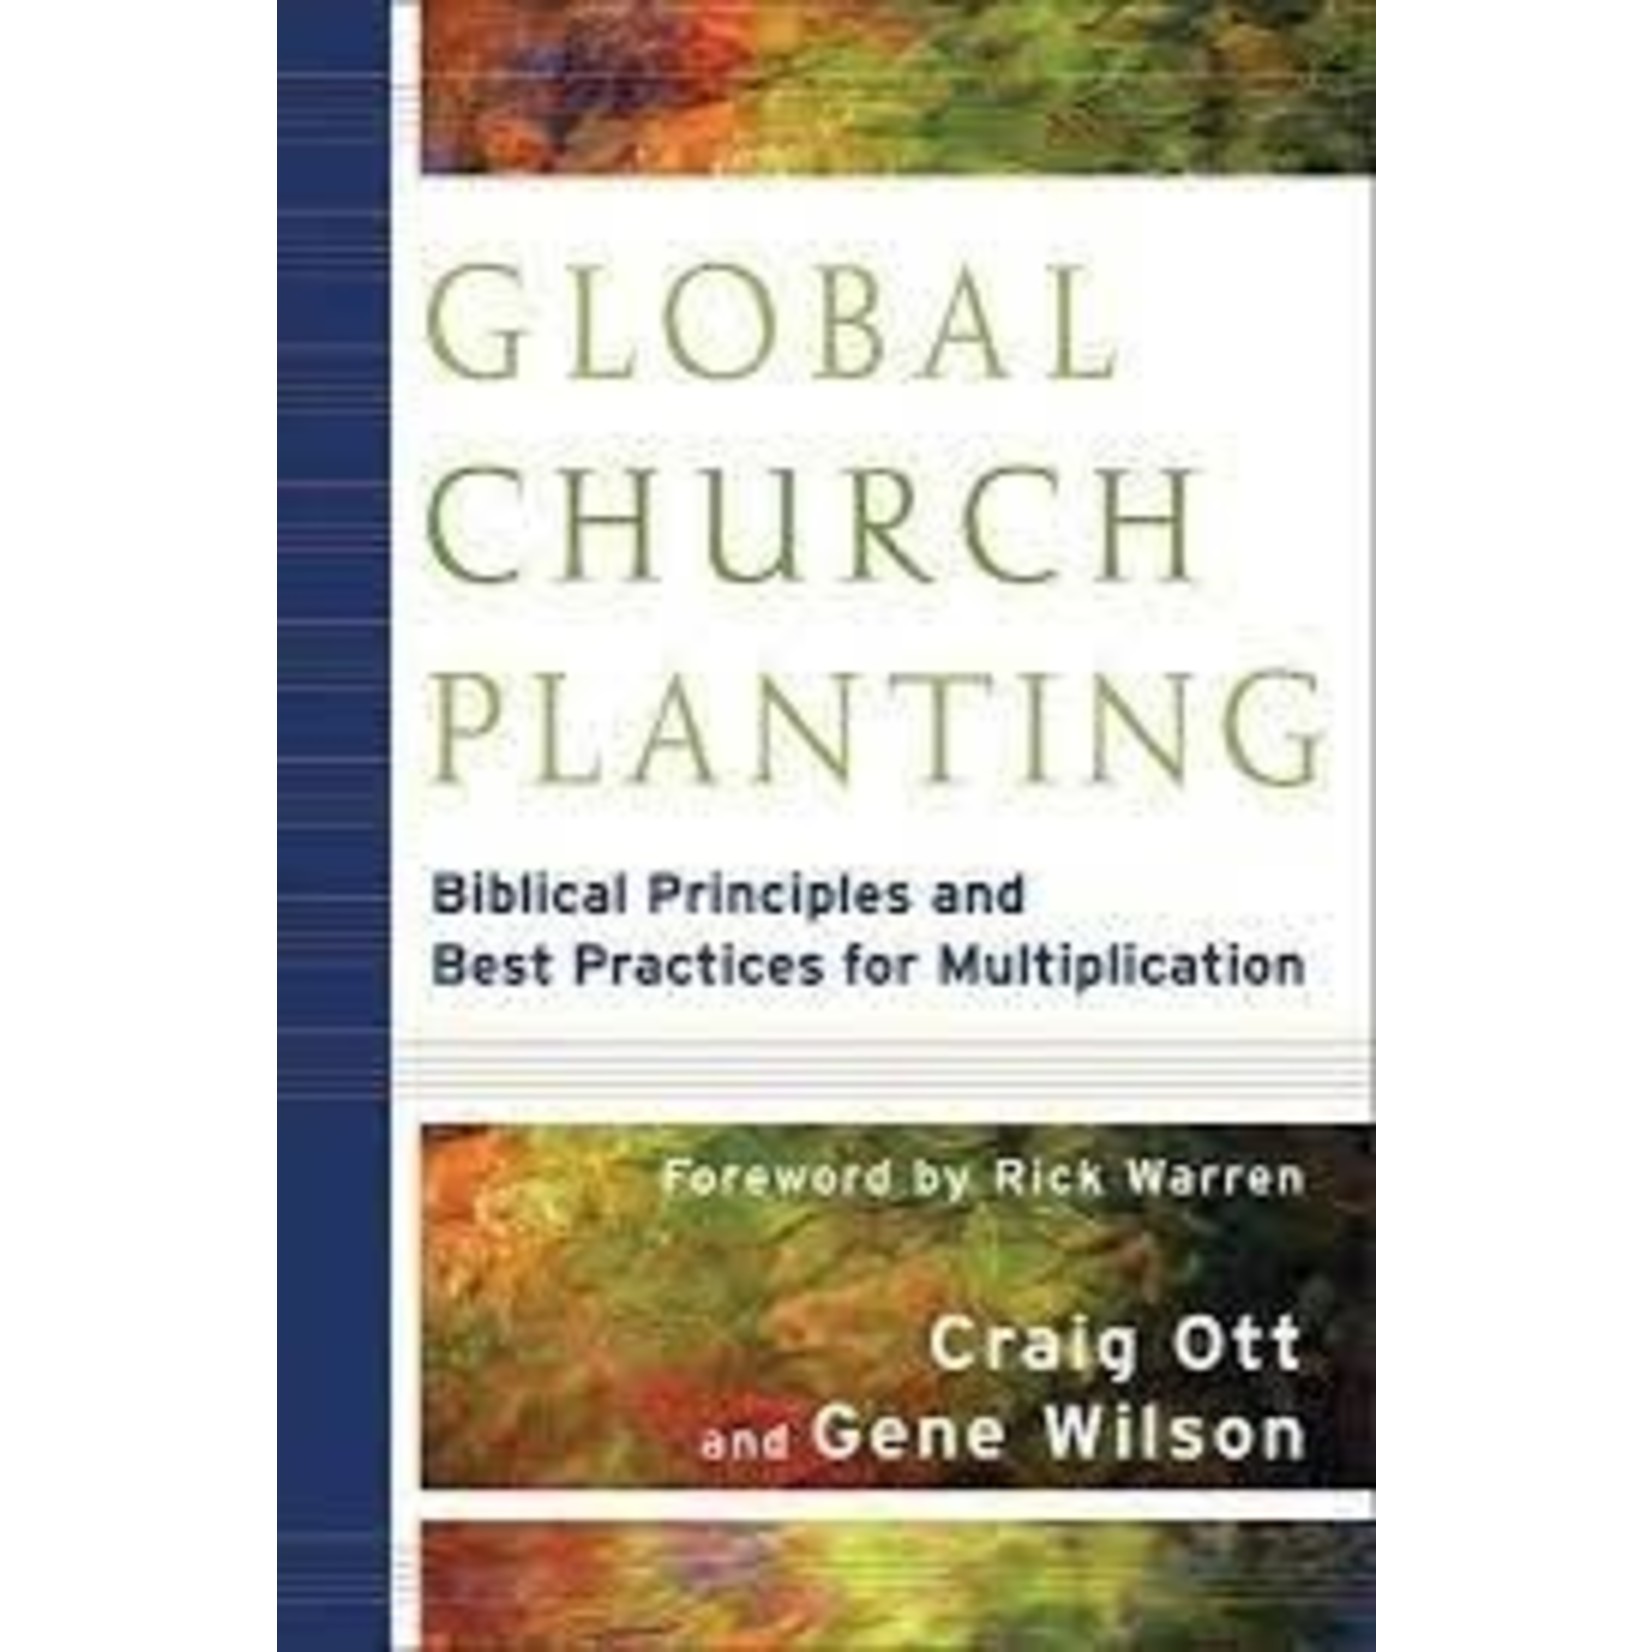 Global Church Planting